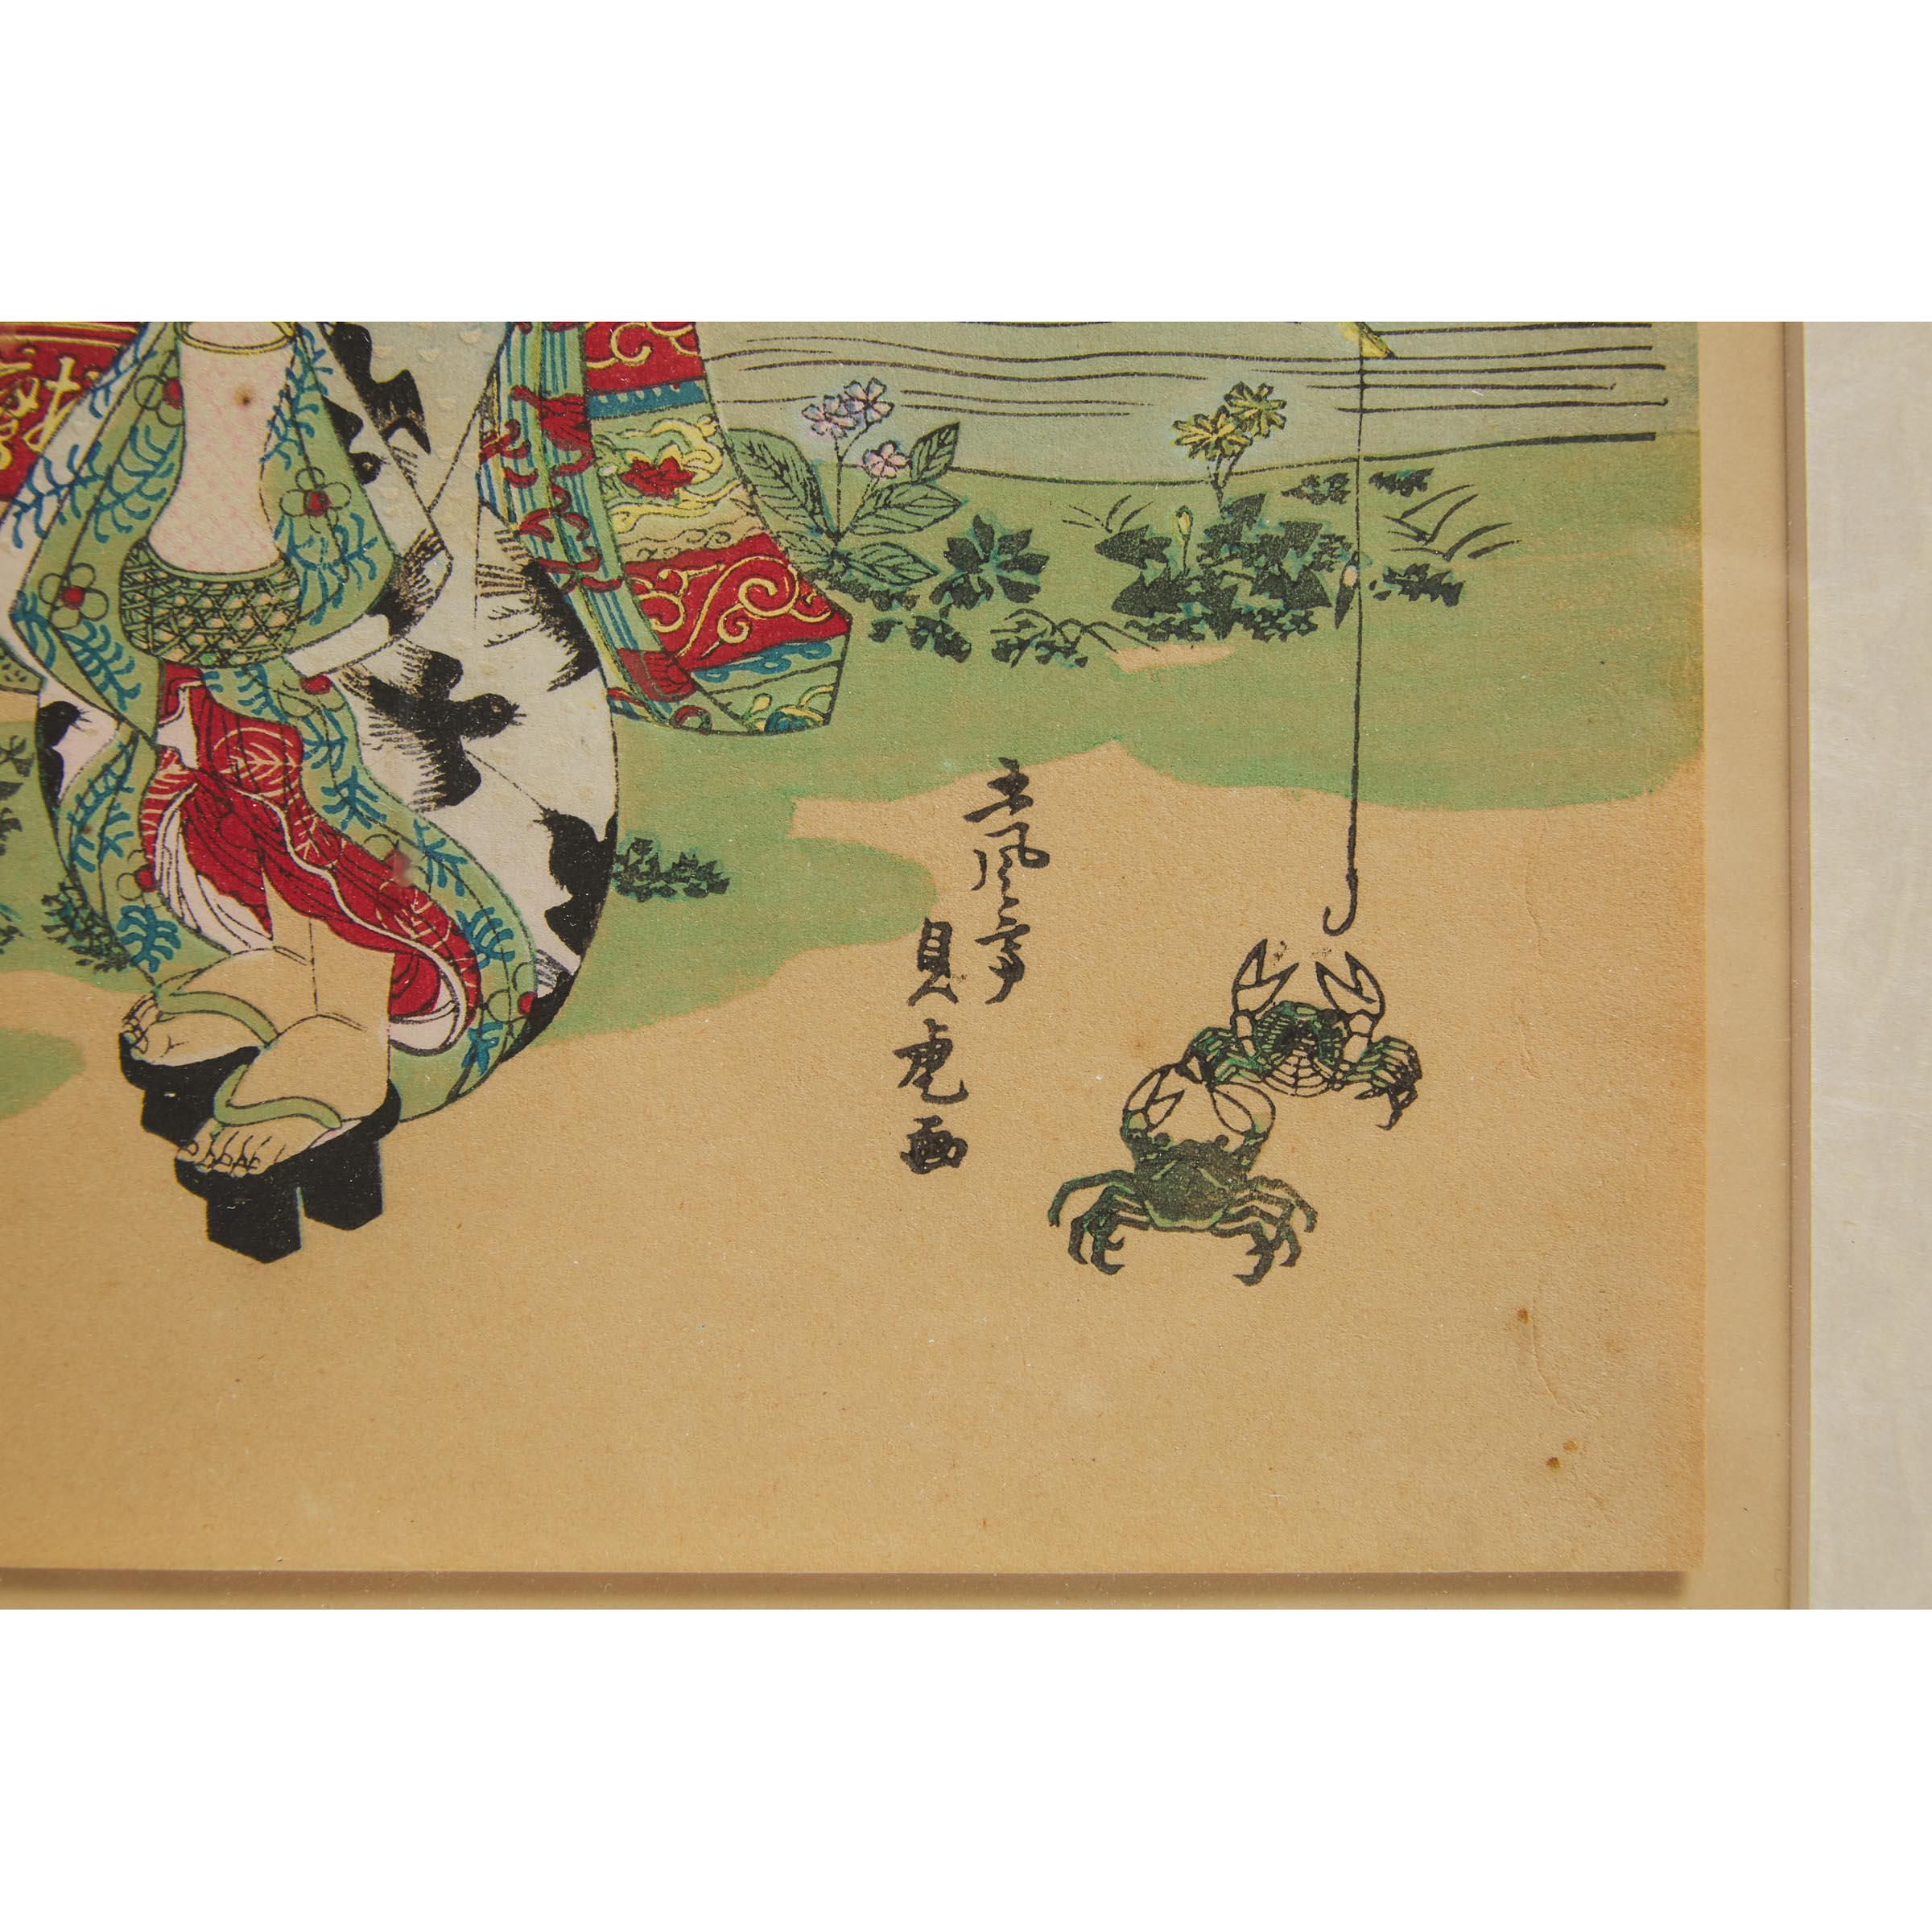 After Utagawa Hiroshige (1797-1858) and Utagawa Kuniyoshi (1798-1861), Four Framed Woodblock Prints, 20th Century